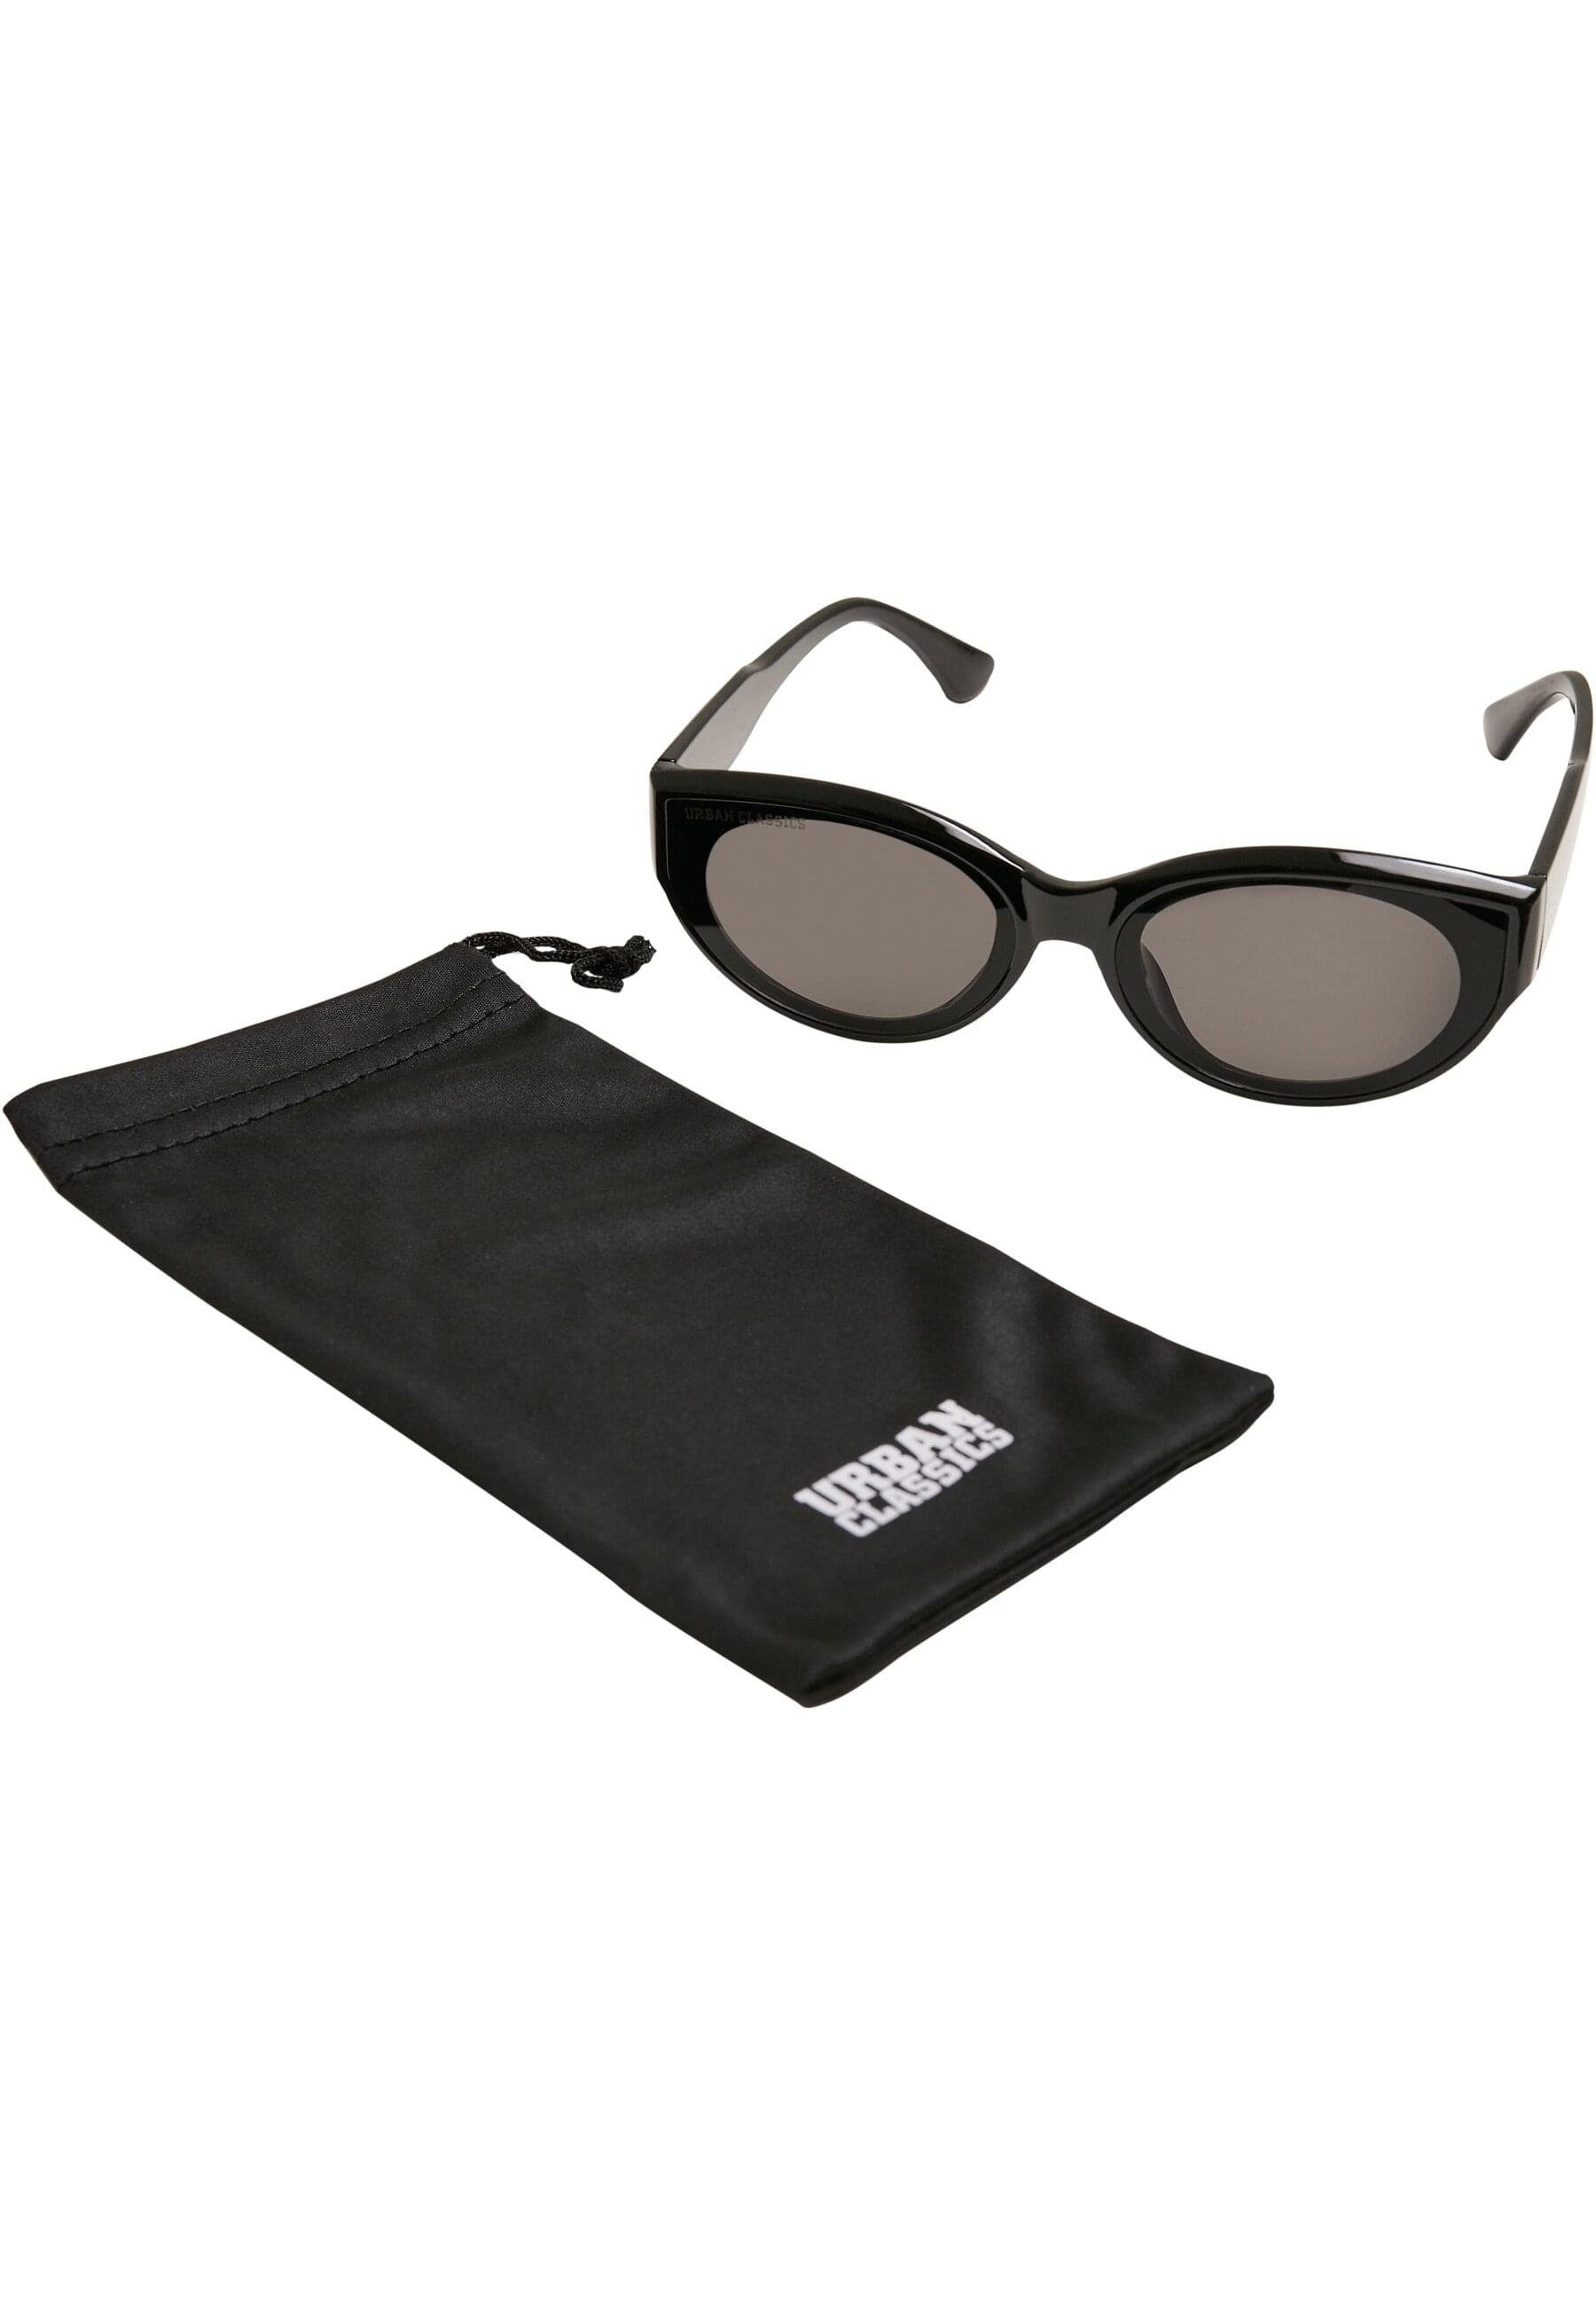 Sunglasses San URBAN Fransisco Sonnenbrille CLASSICS Unisex